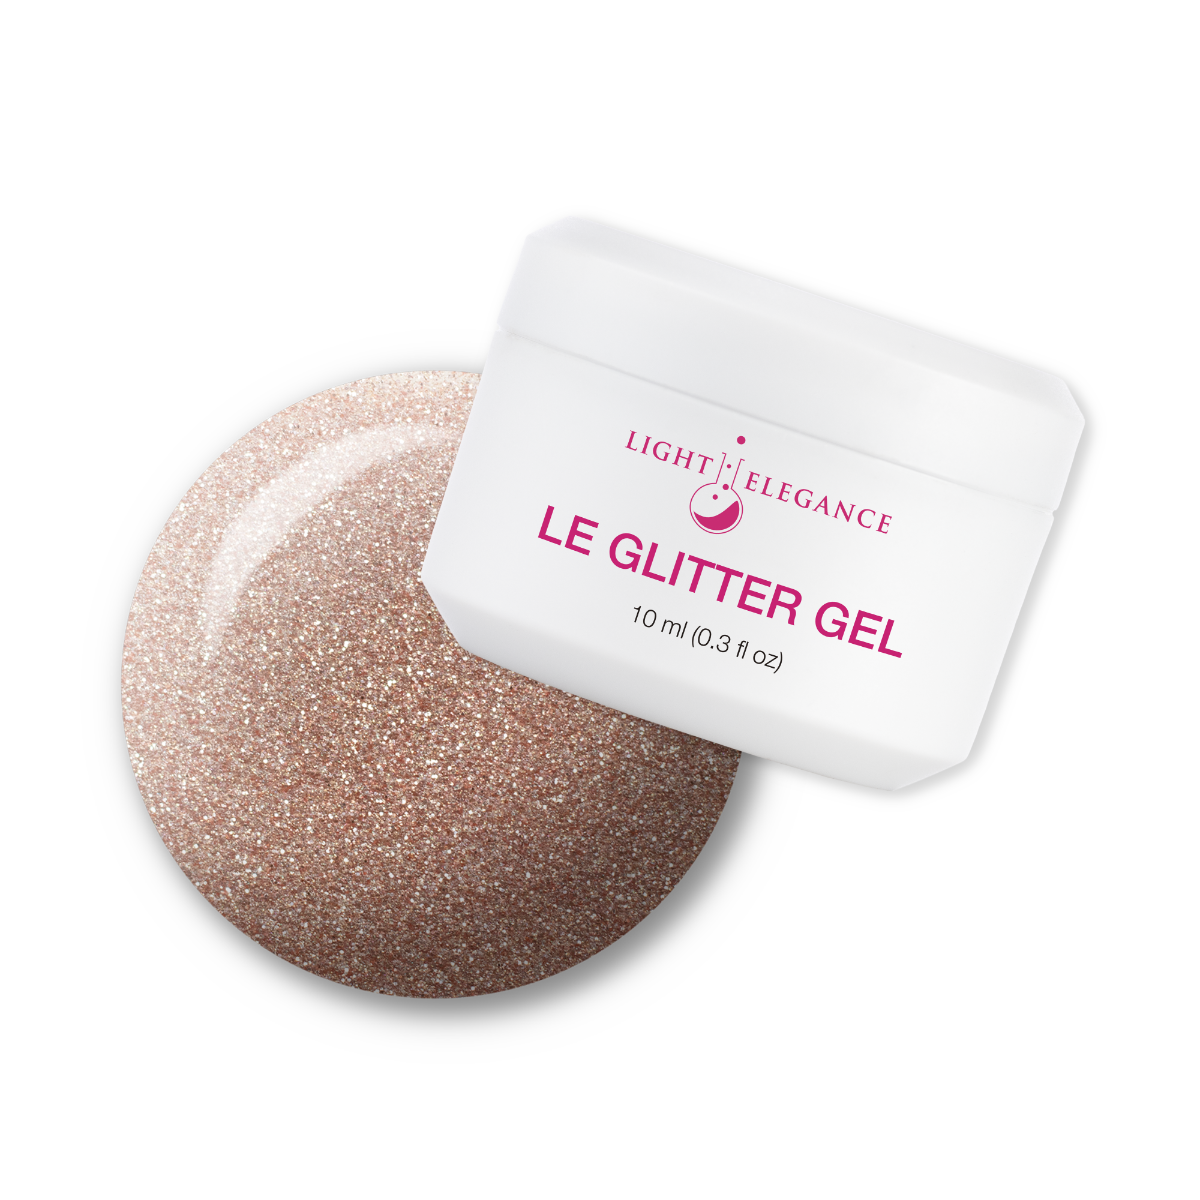 Light Elegance Glitter Gel - Pints & Quartz - Creata Beauty - Professional Beauty Products